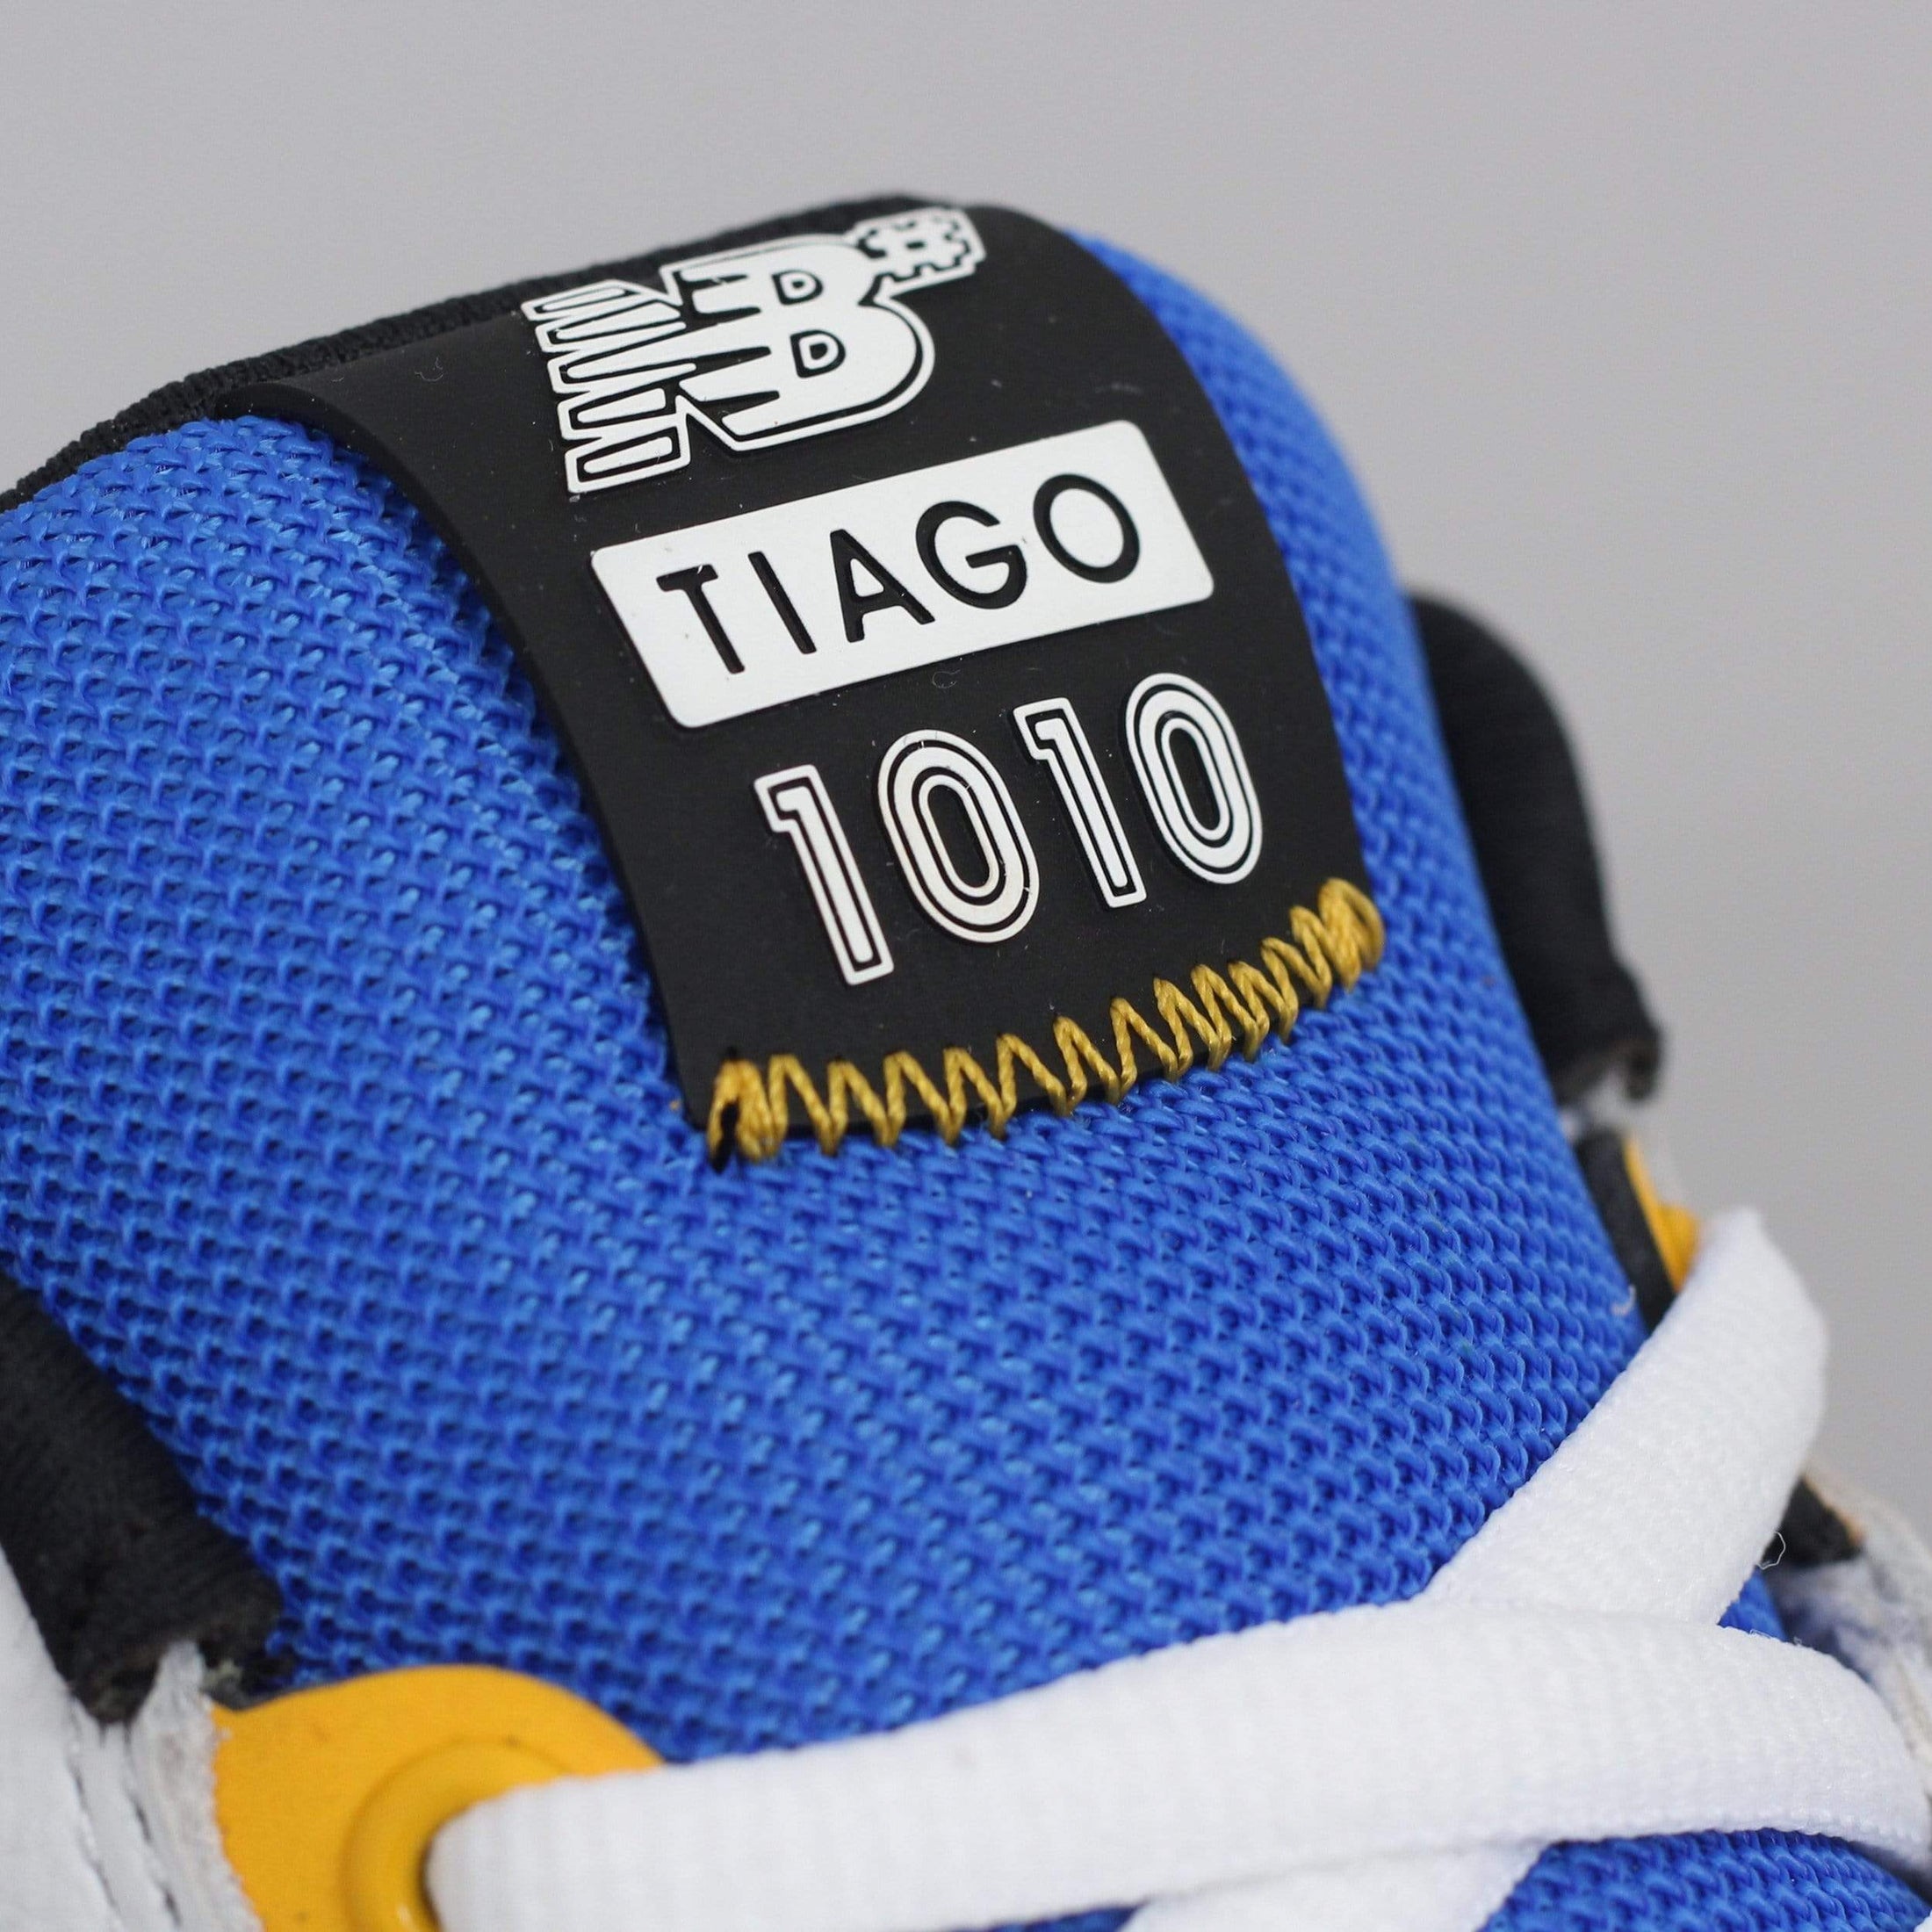 New Balance Tiago 1010 Shoes White / Blue